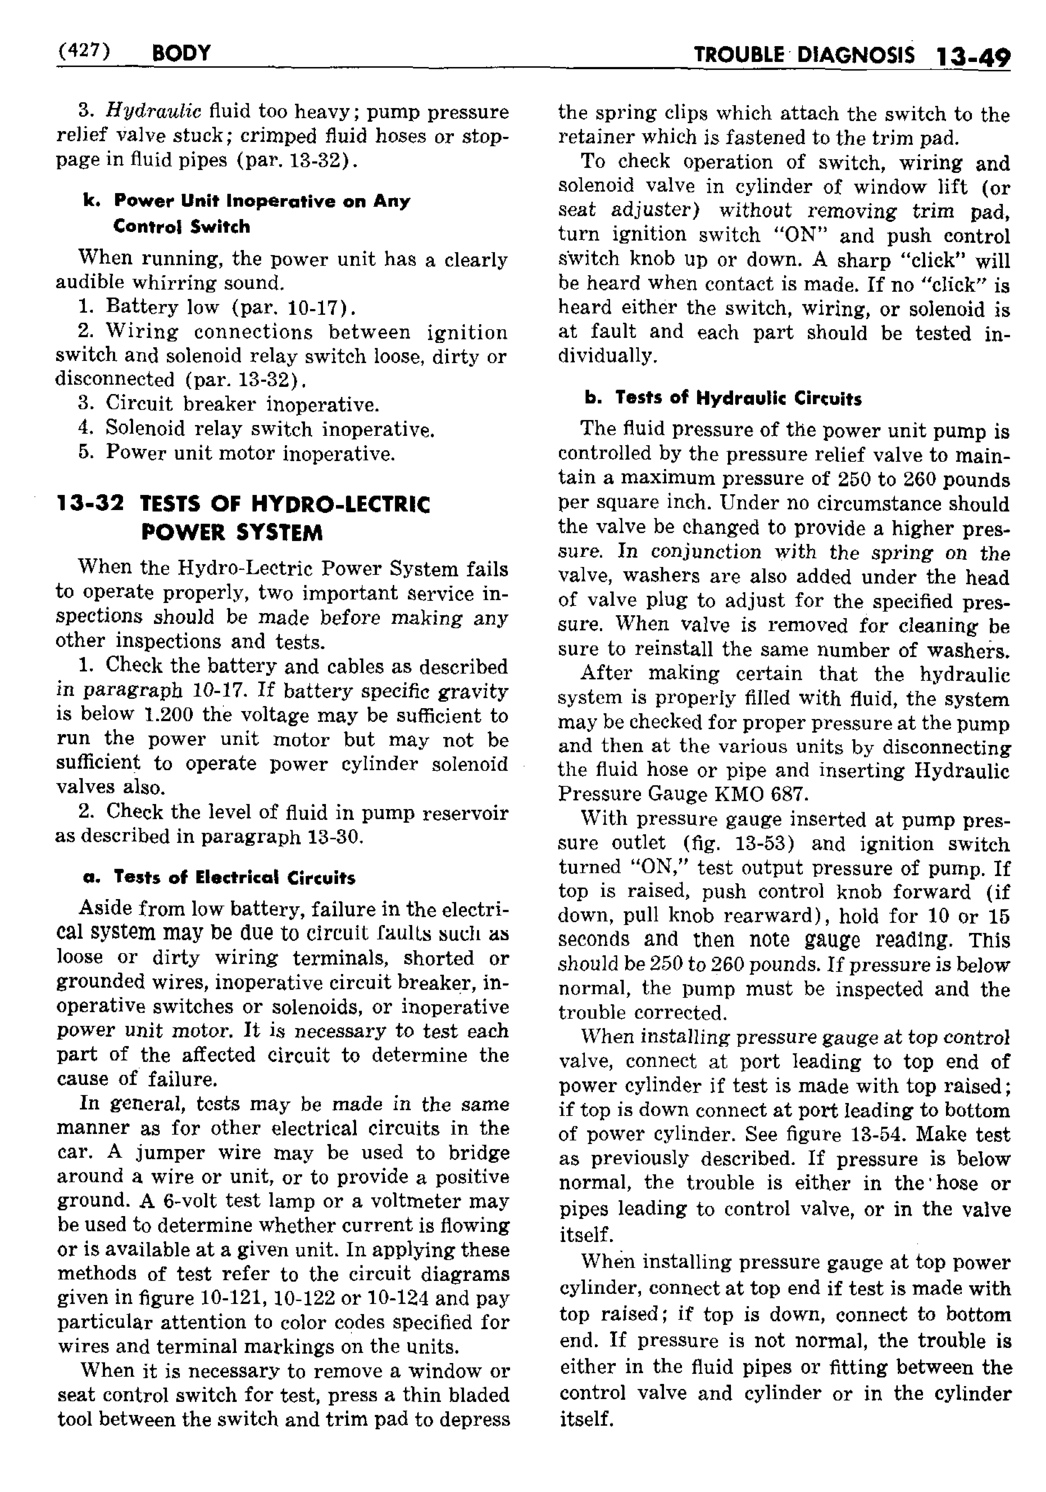 n_14 1950 Buick Shop Manual - Body-049-049.jpg